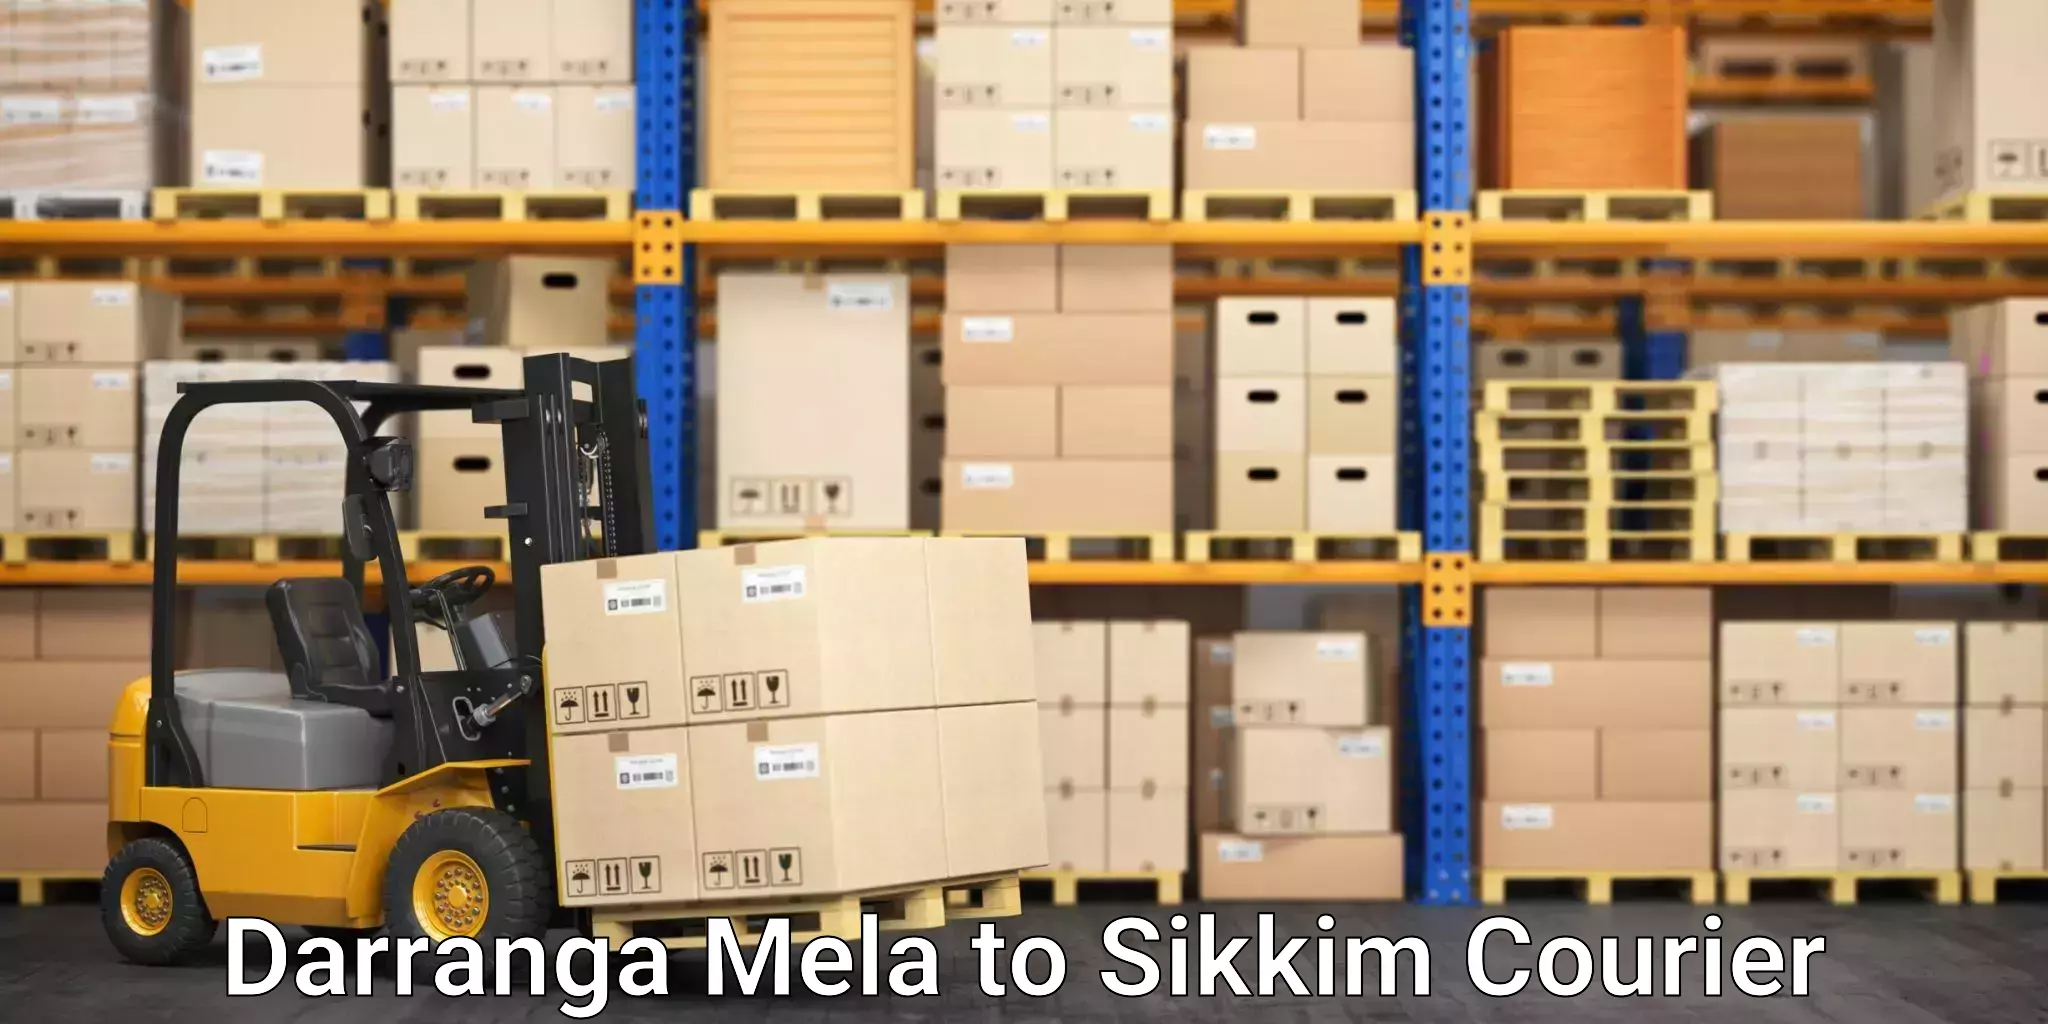 Flexible delivery schedules Darranga Mela to Ranipool